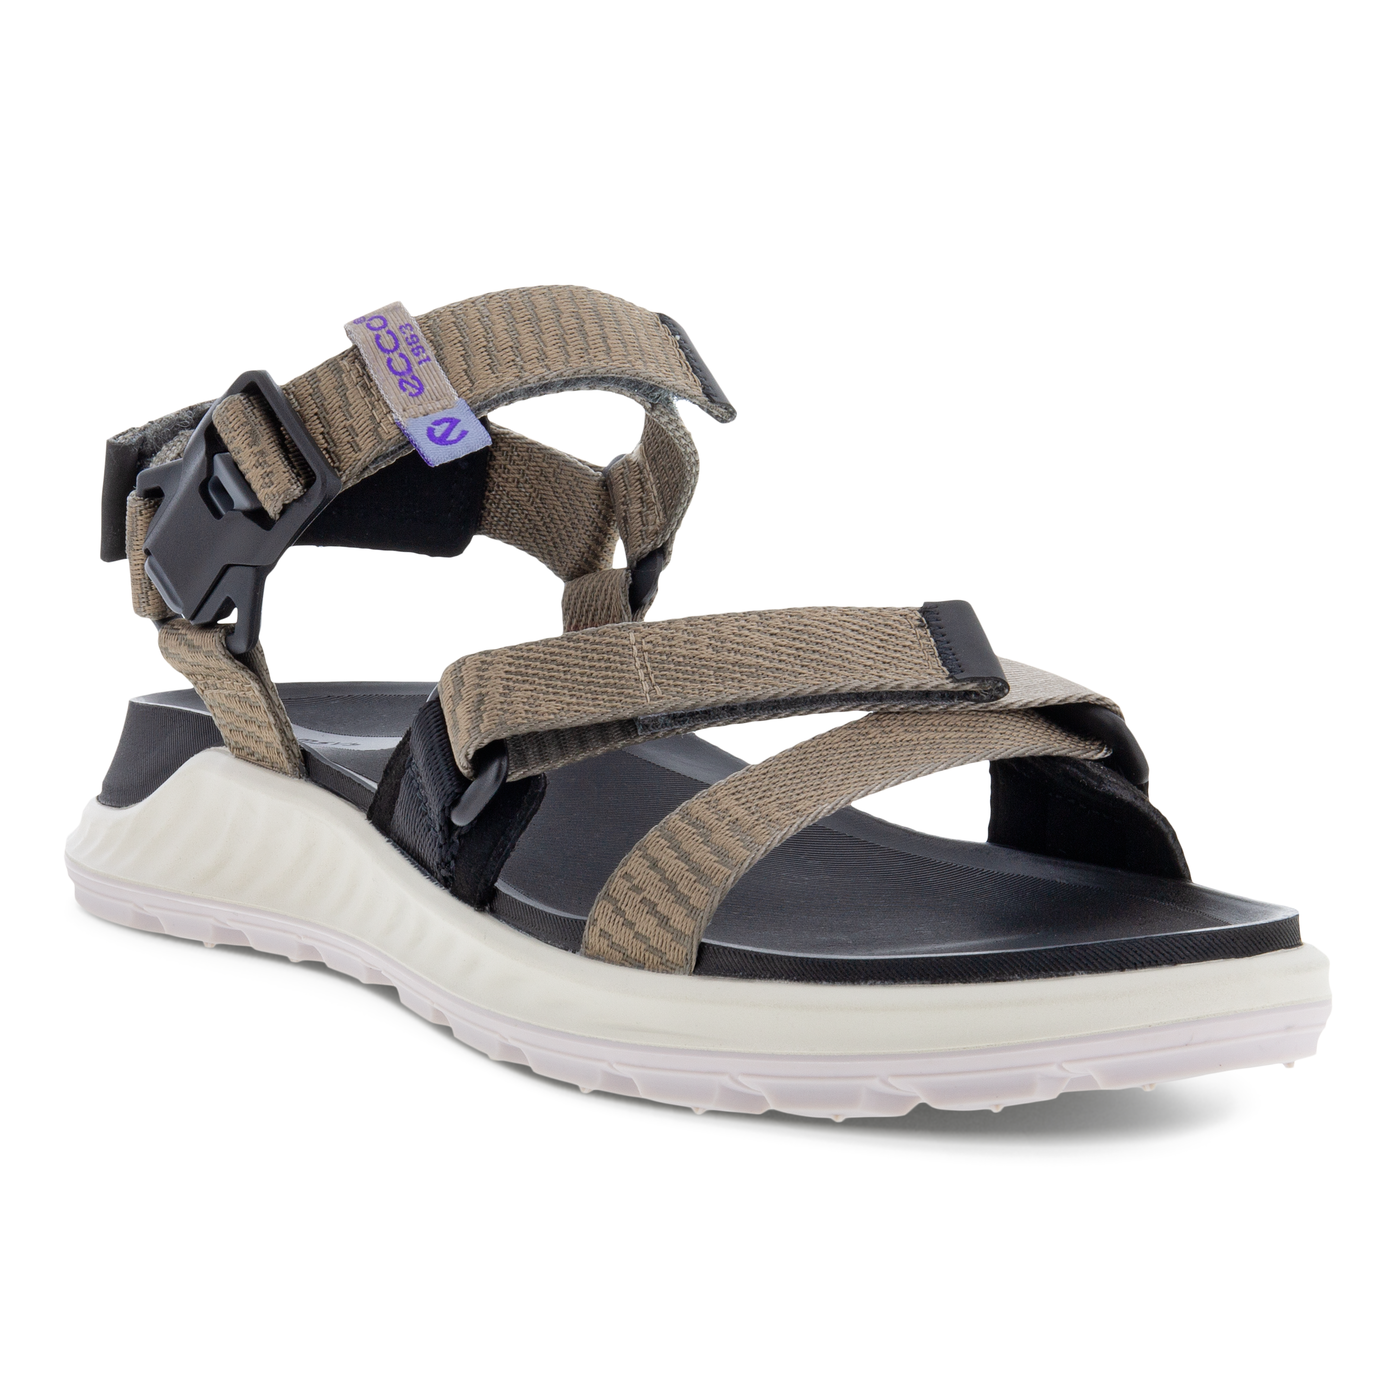 Exowrap W - shoe&me - Ecco - Sandal - Sandals, Summer, Womens